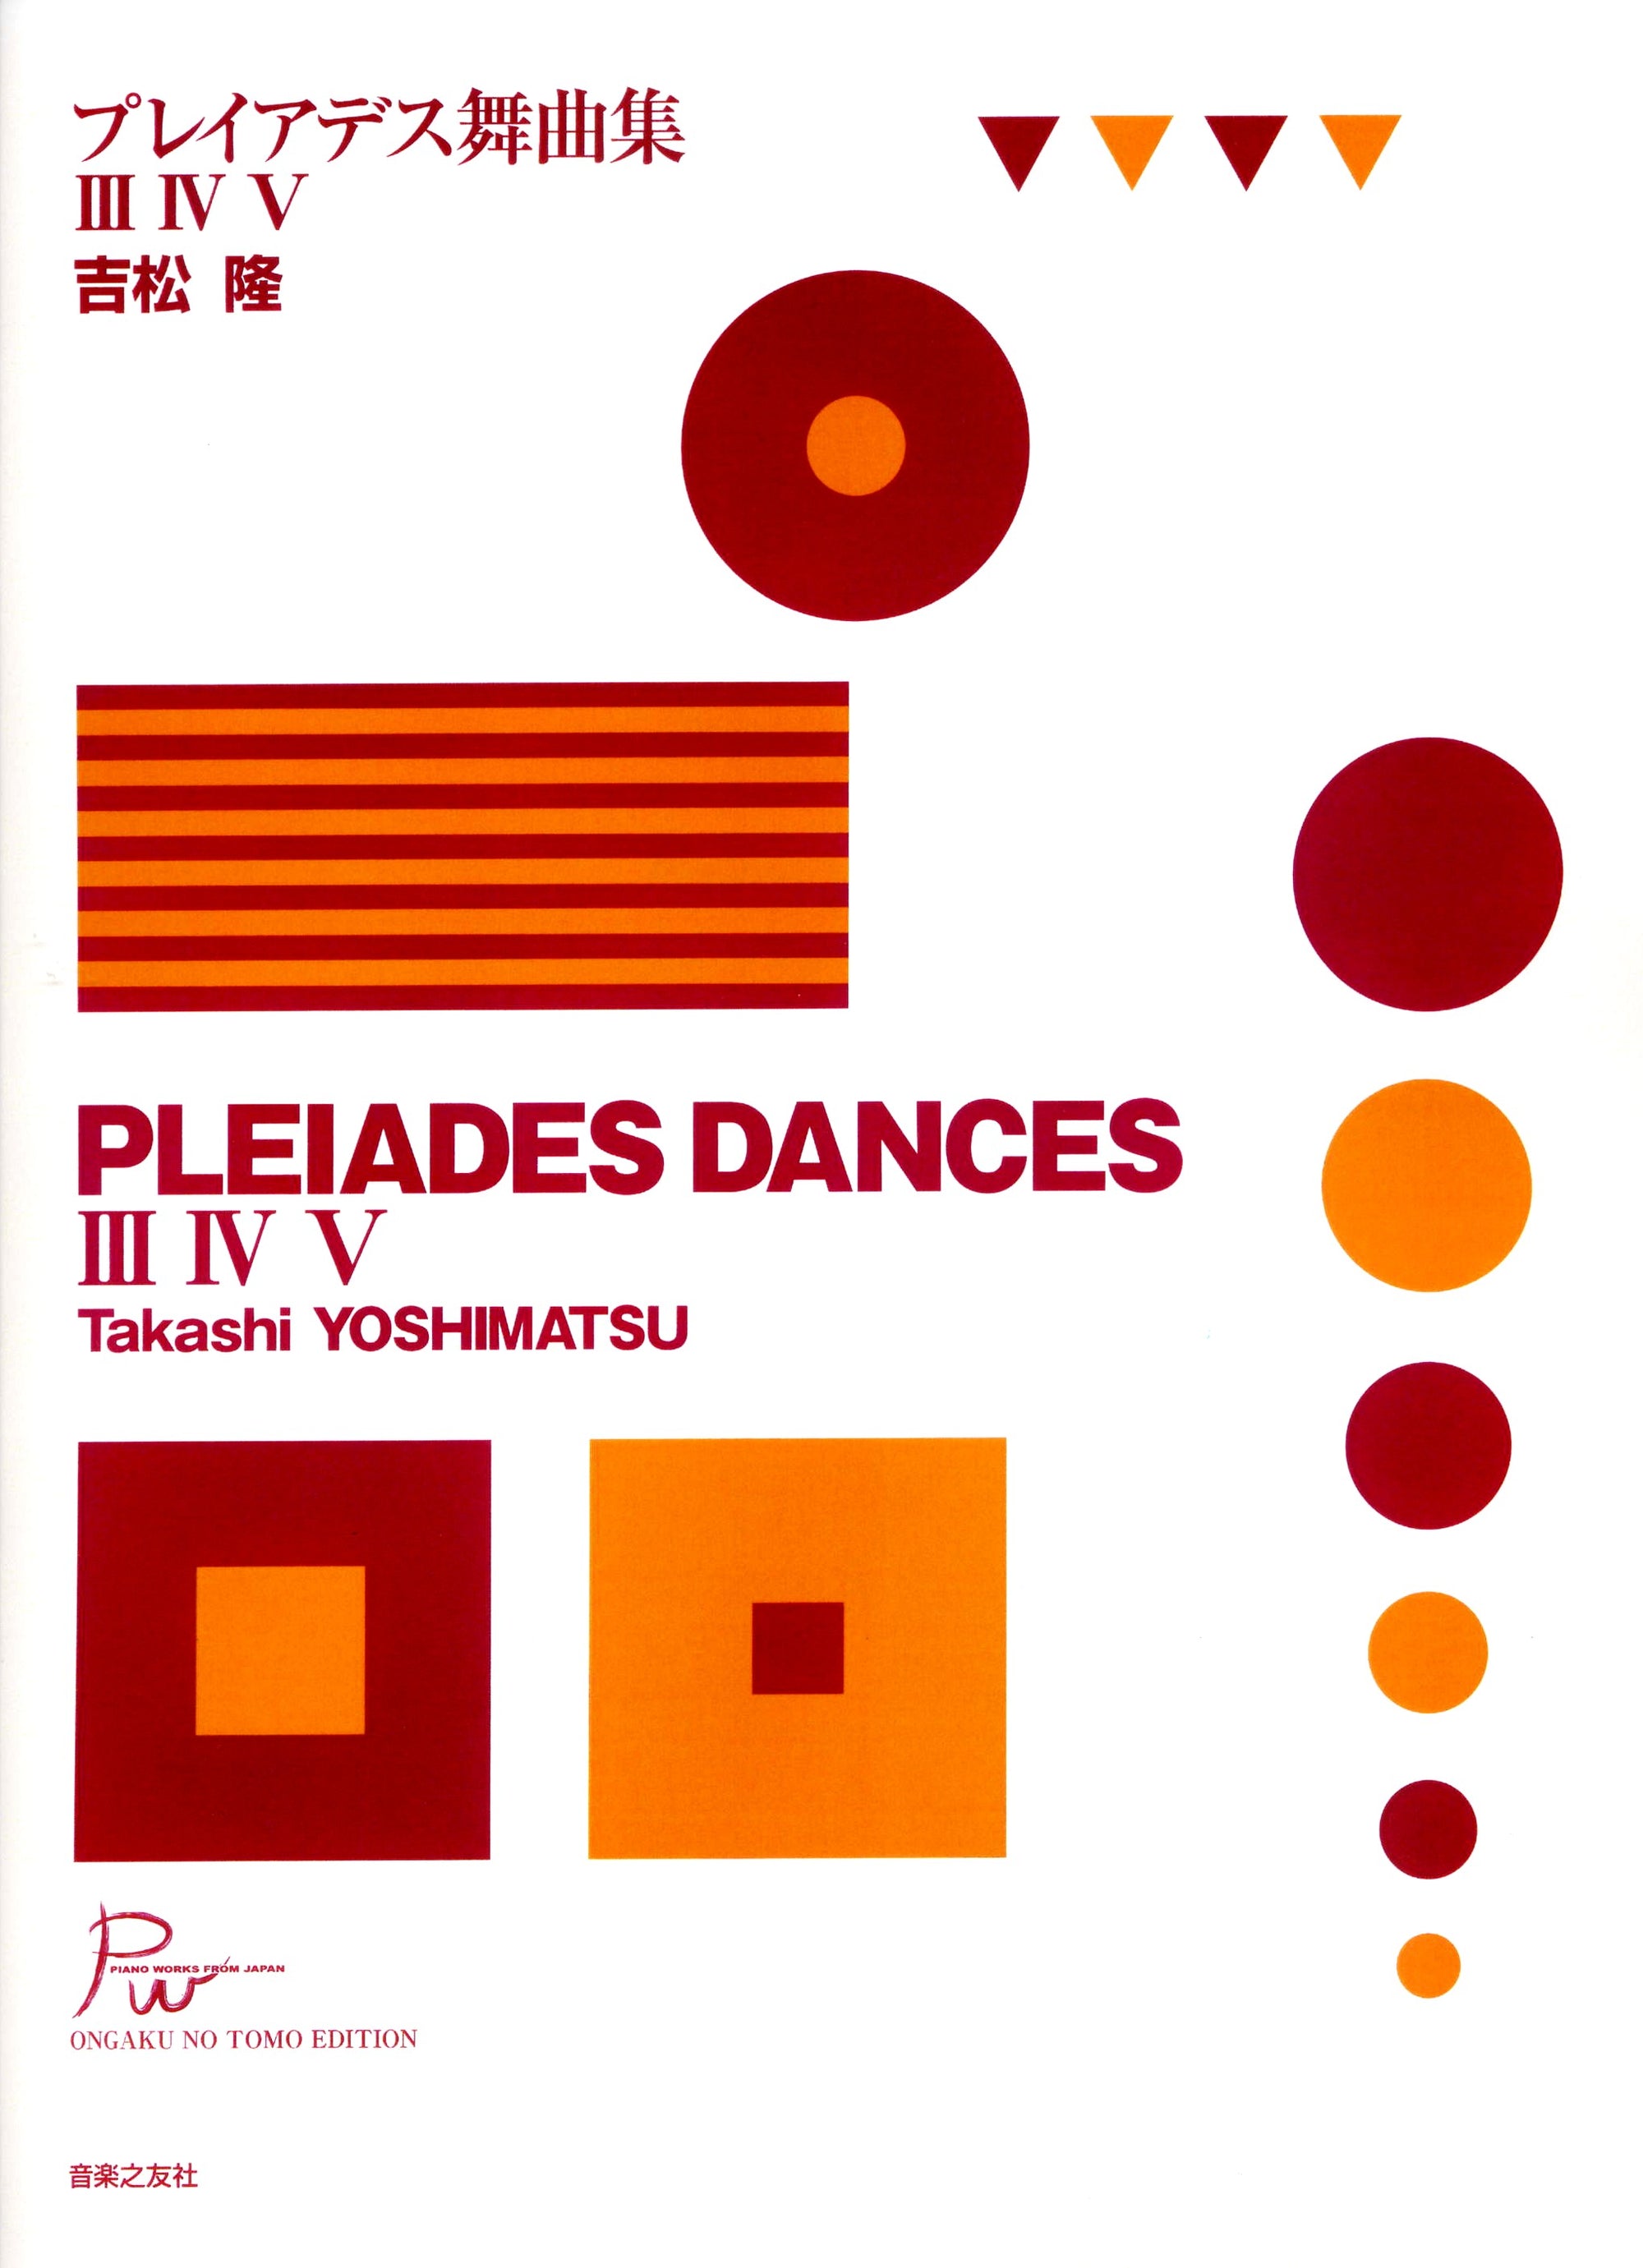 Yoshimatsu: Pleiades Dances III, IV, & V